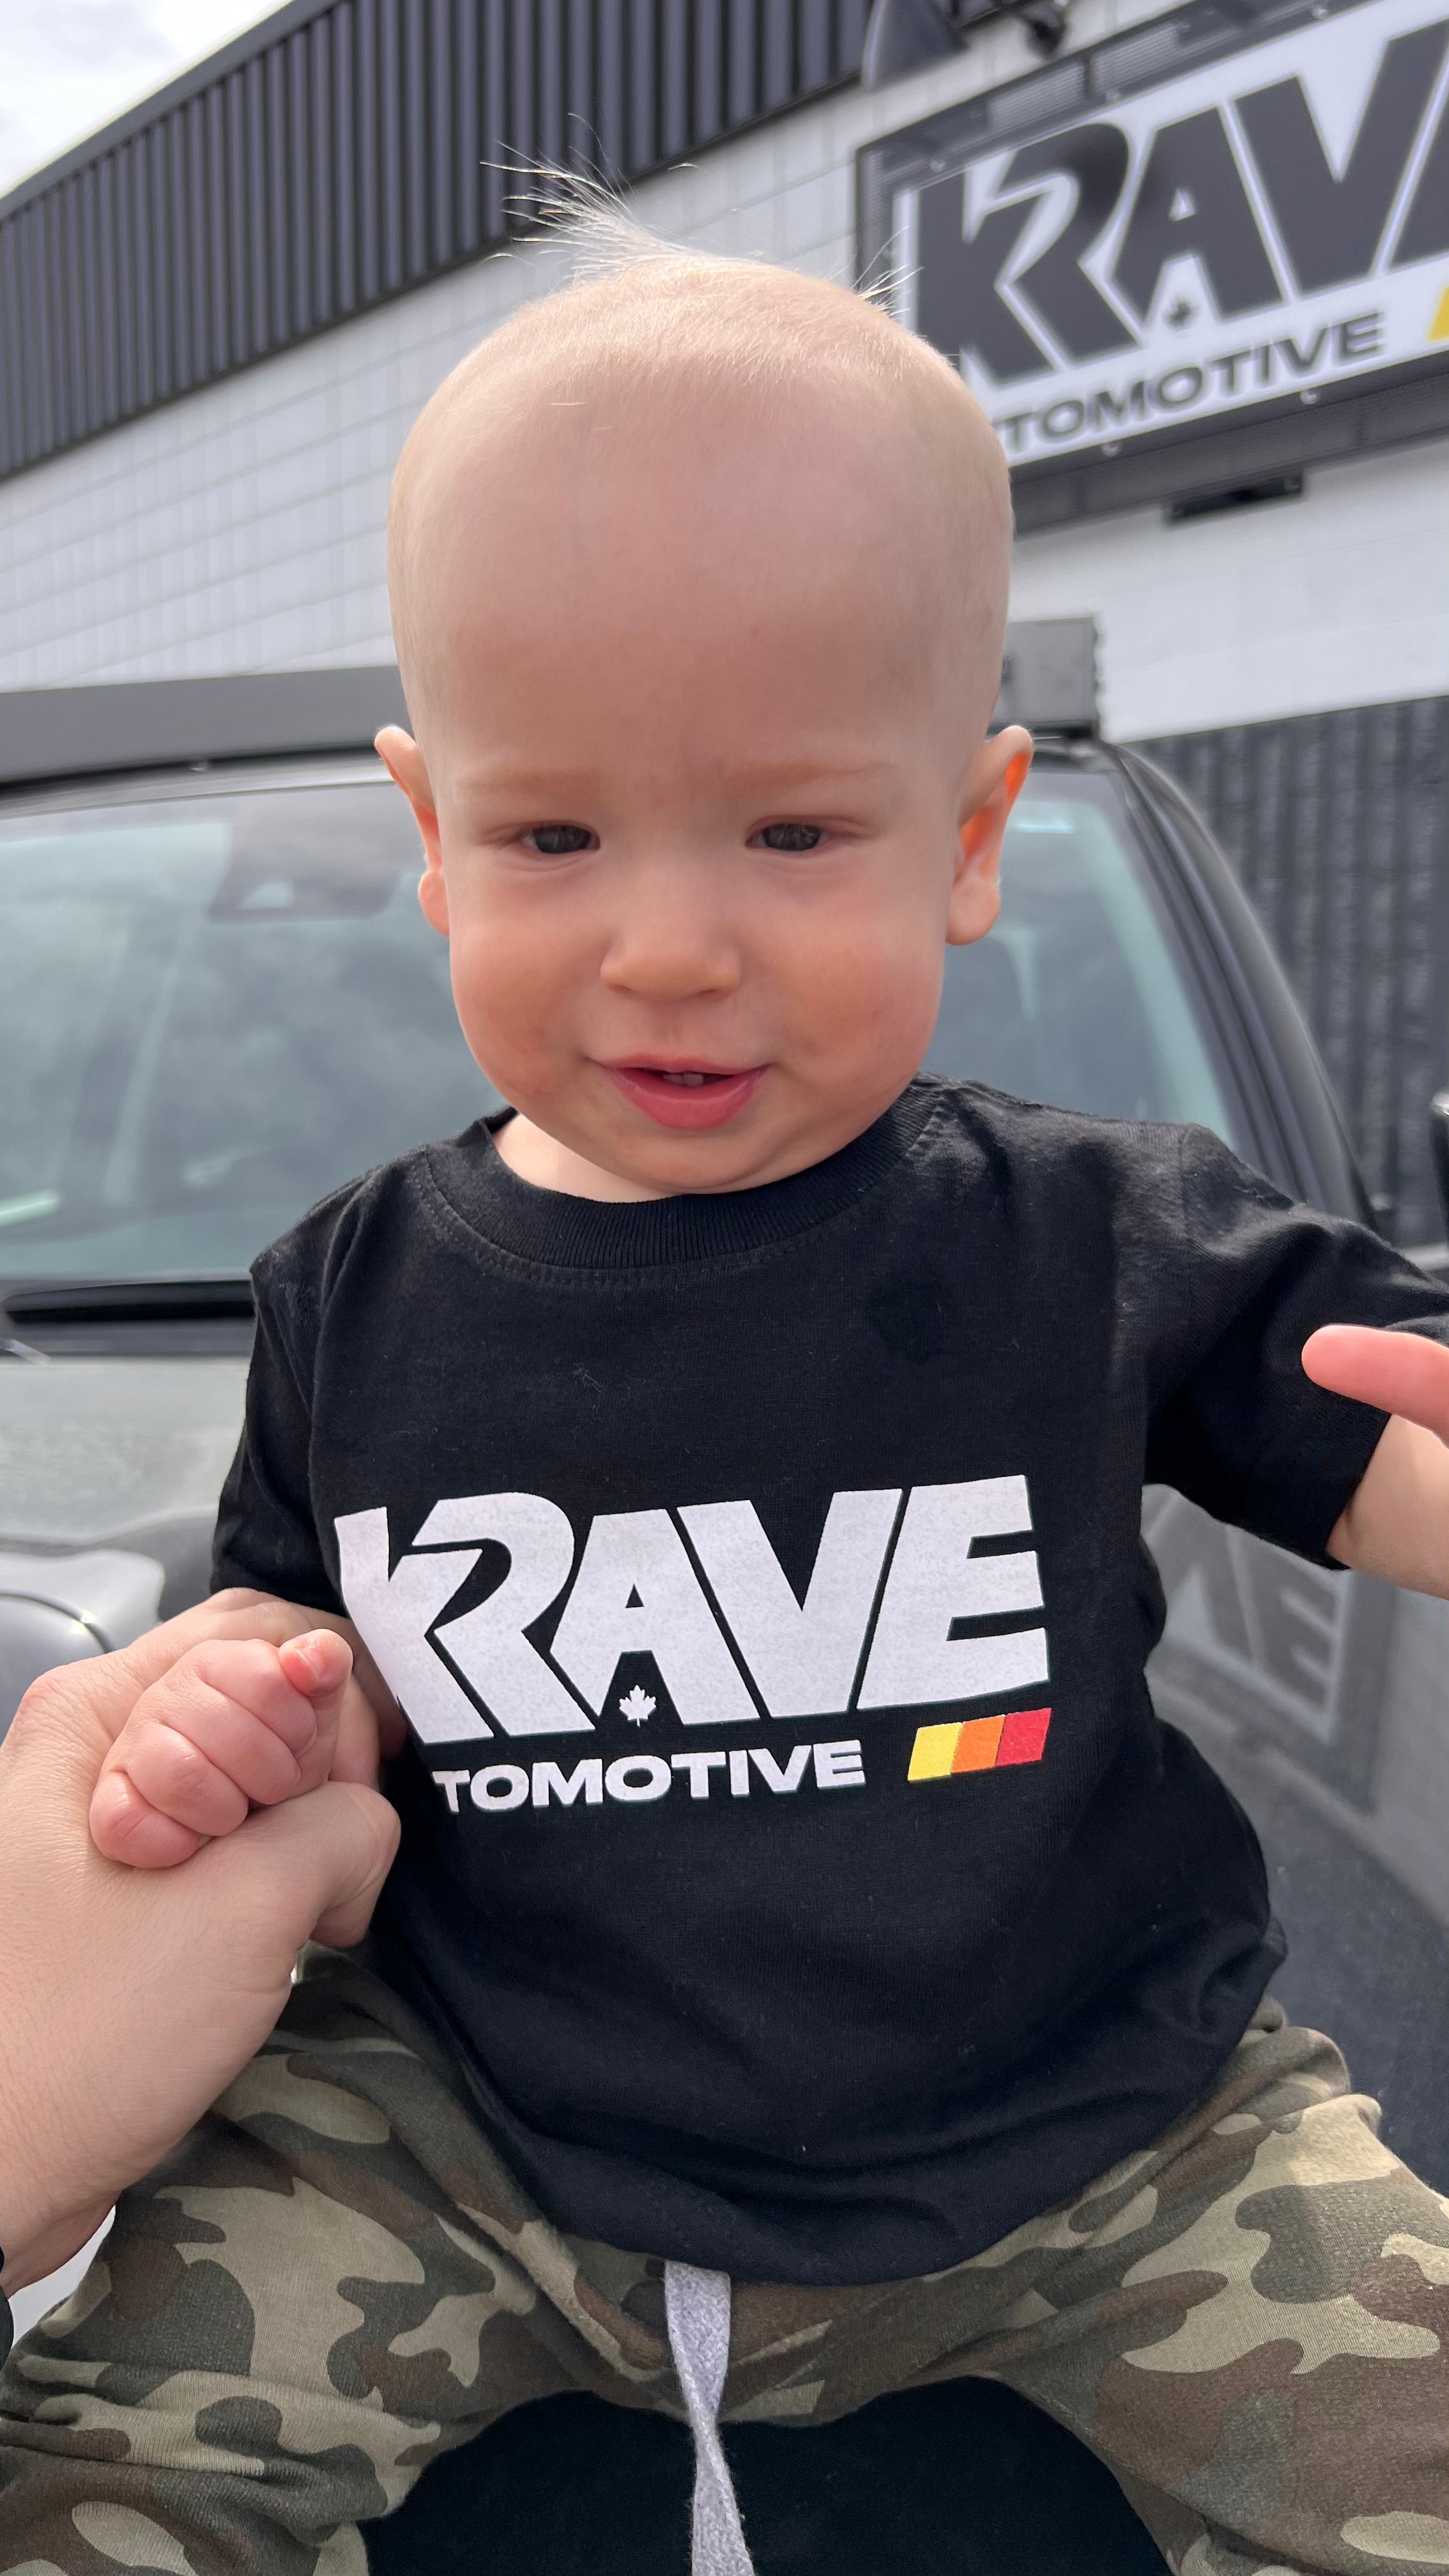 KRave Automotive Toddler Jersey Tee